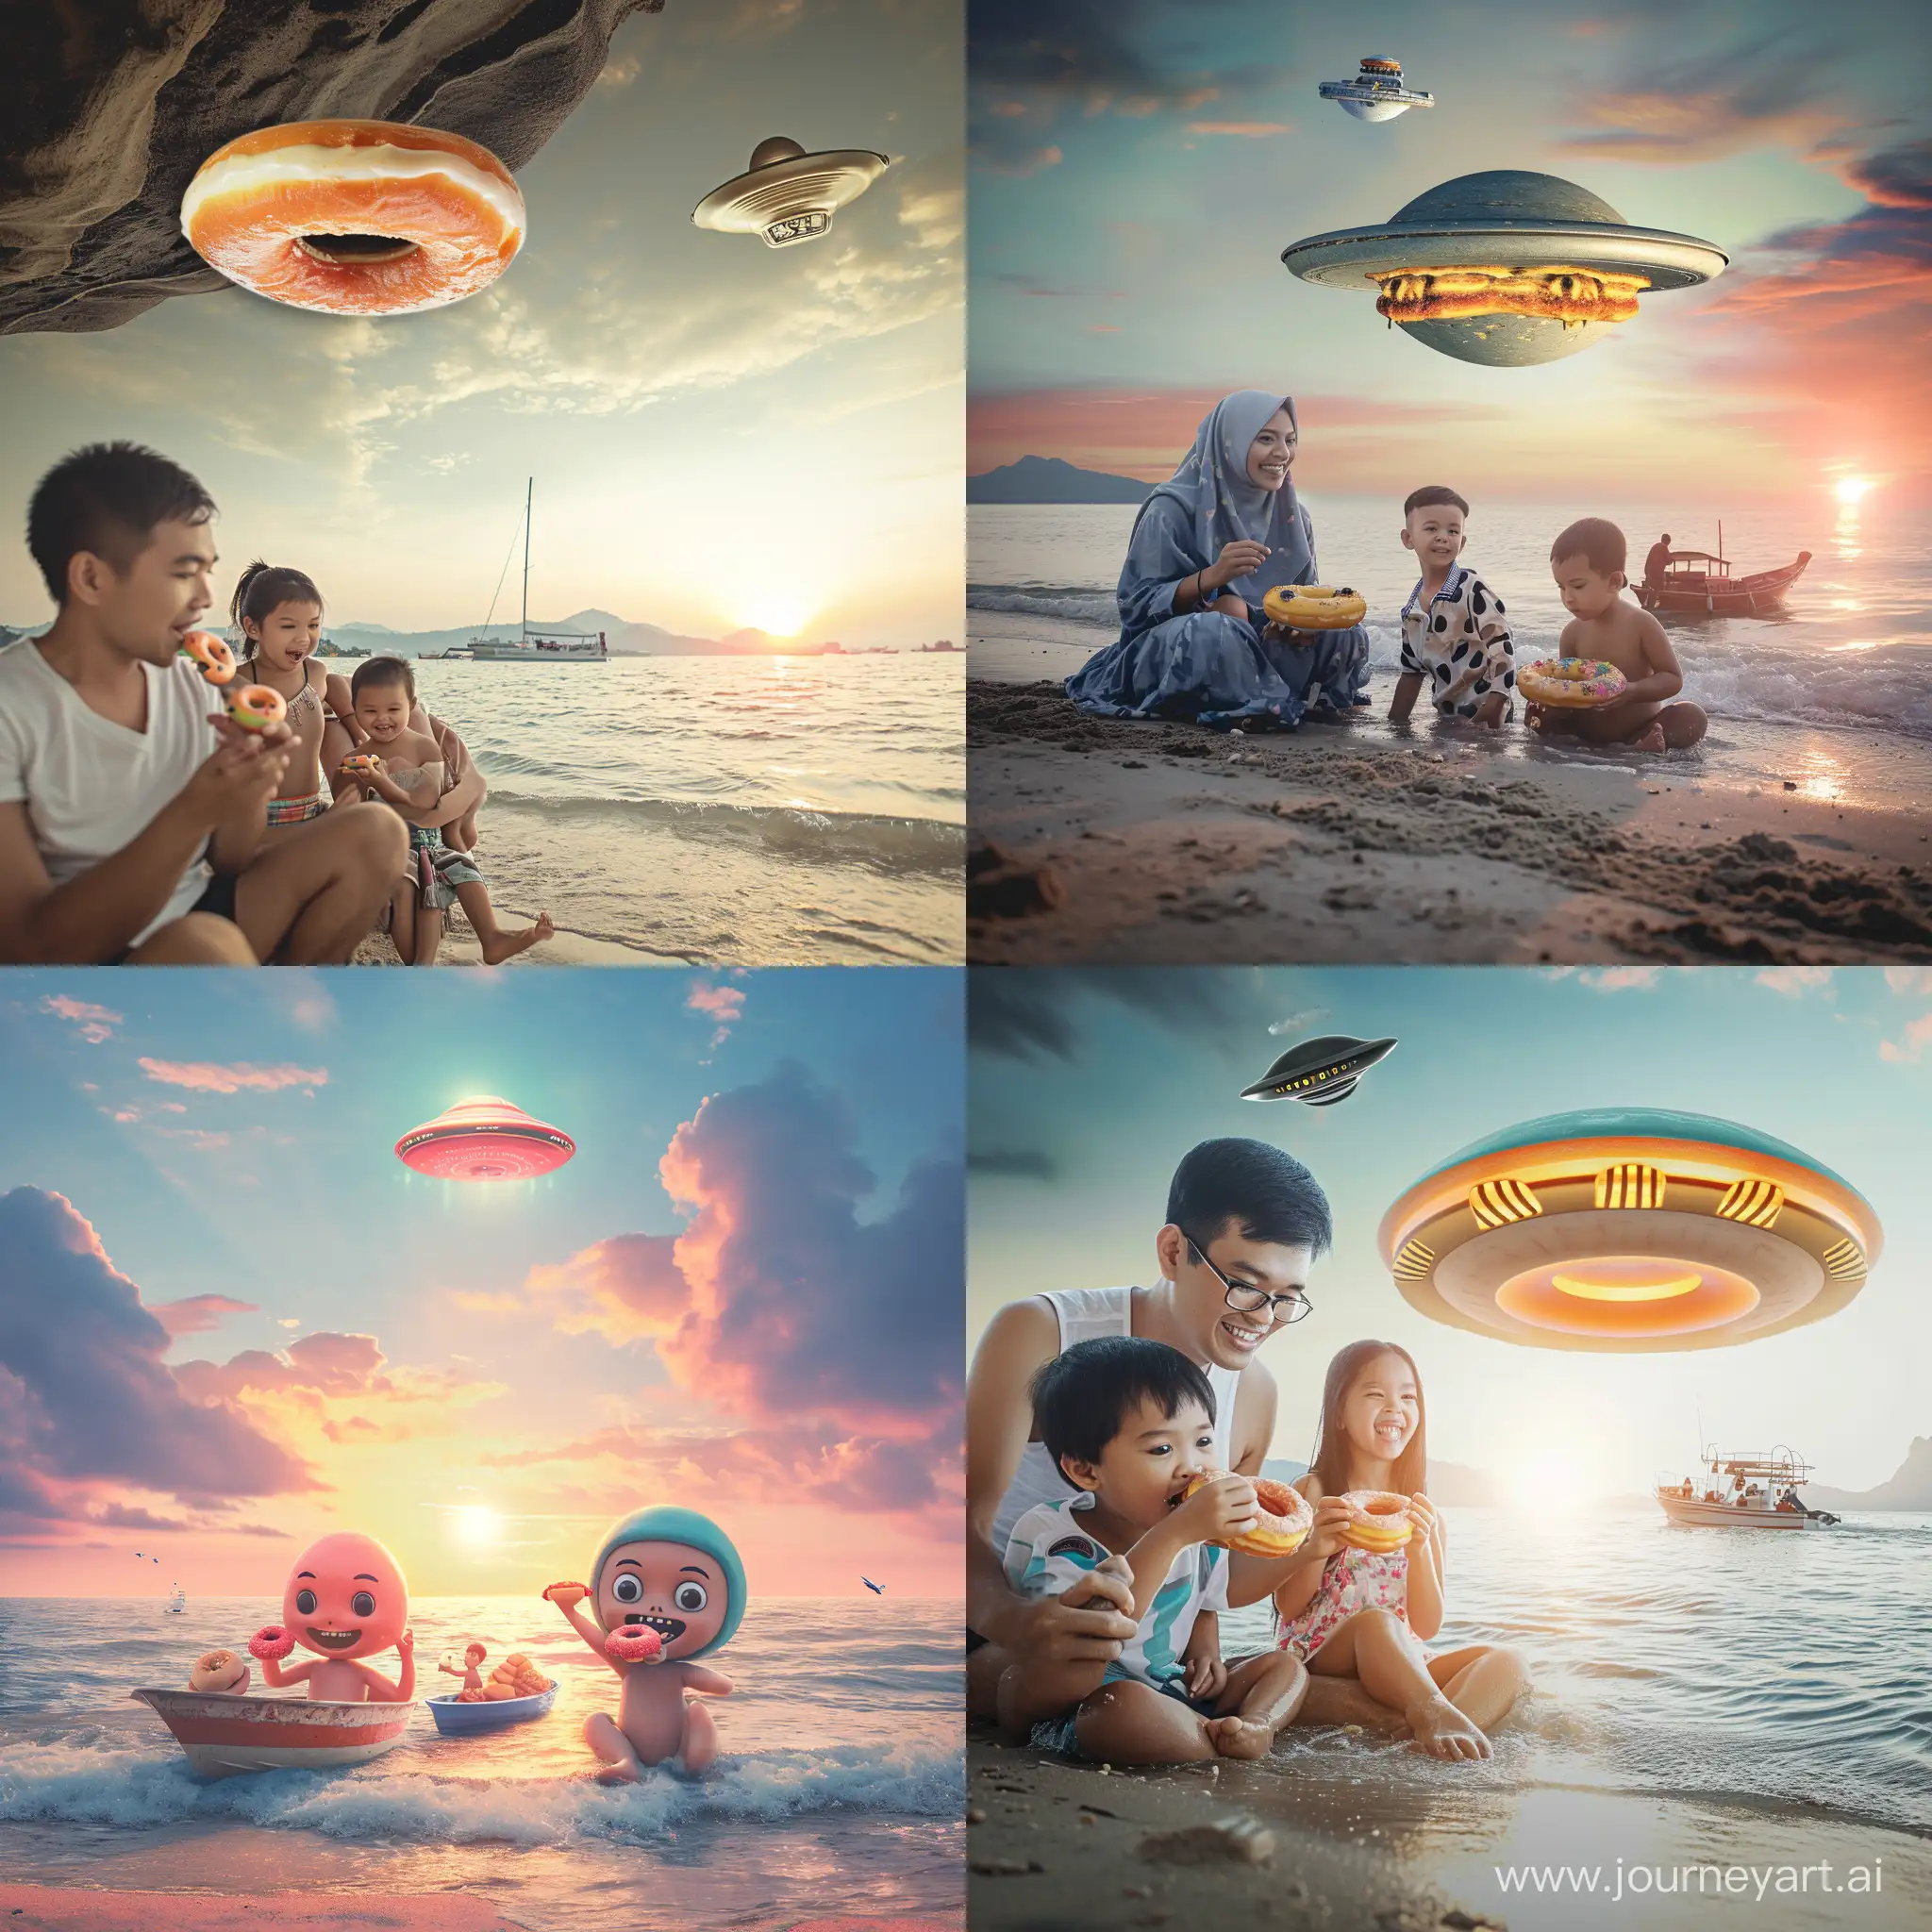 Joyful-Malay-Family-Enjoying-Beach-Picnic-with-Alien-Encounter